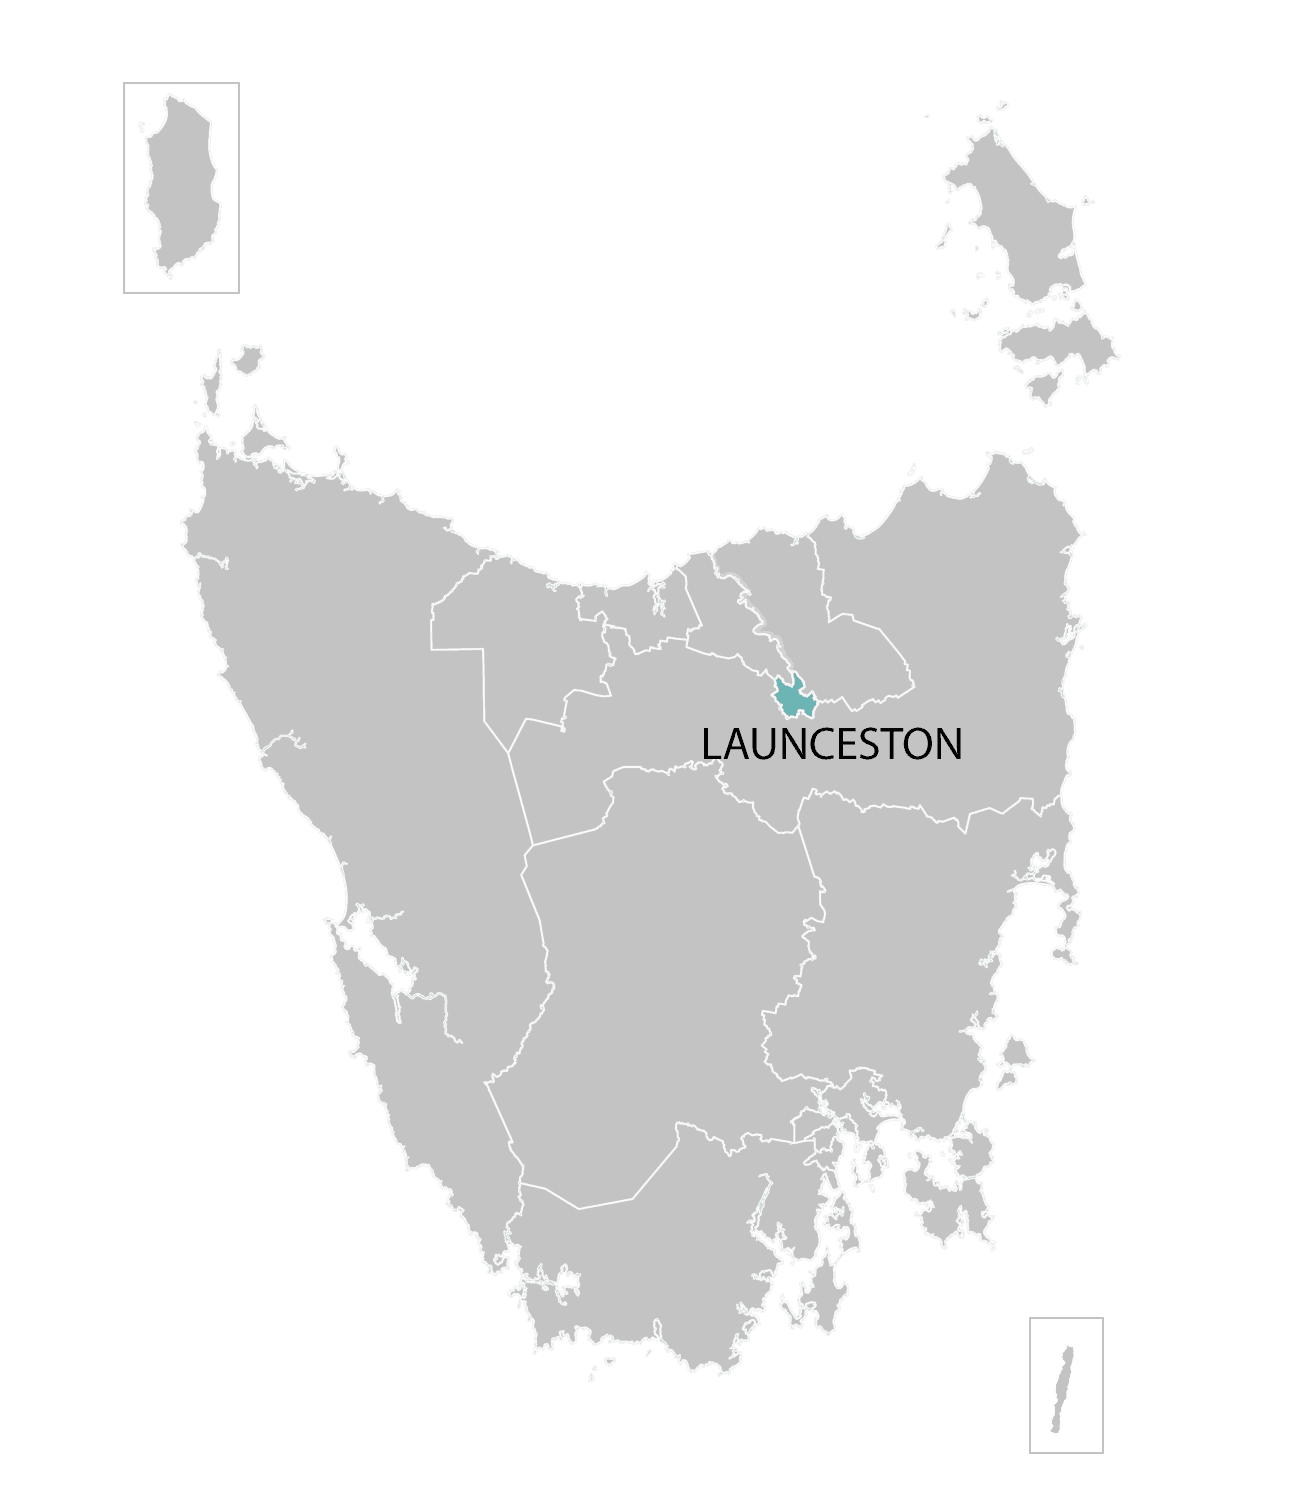 Launceston division highlighted on illustrated map of Tasmania